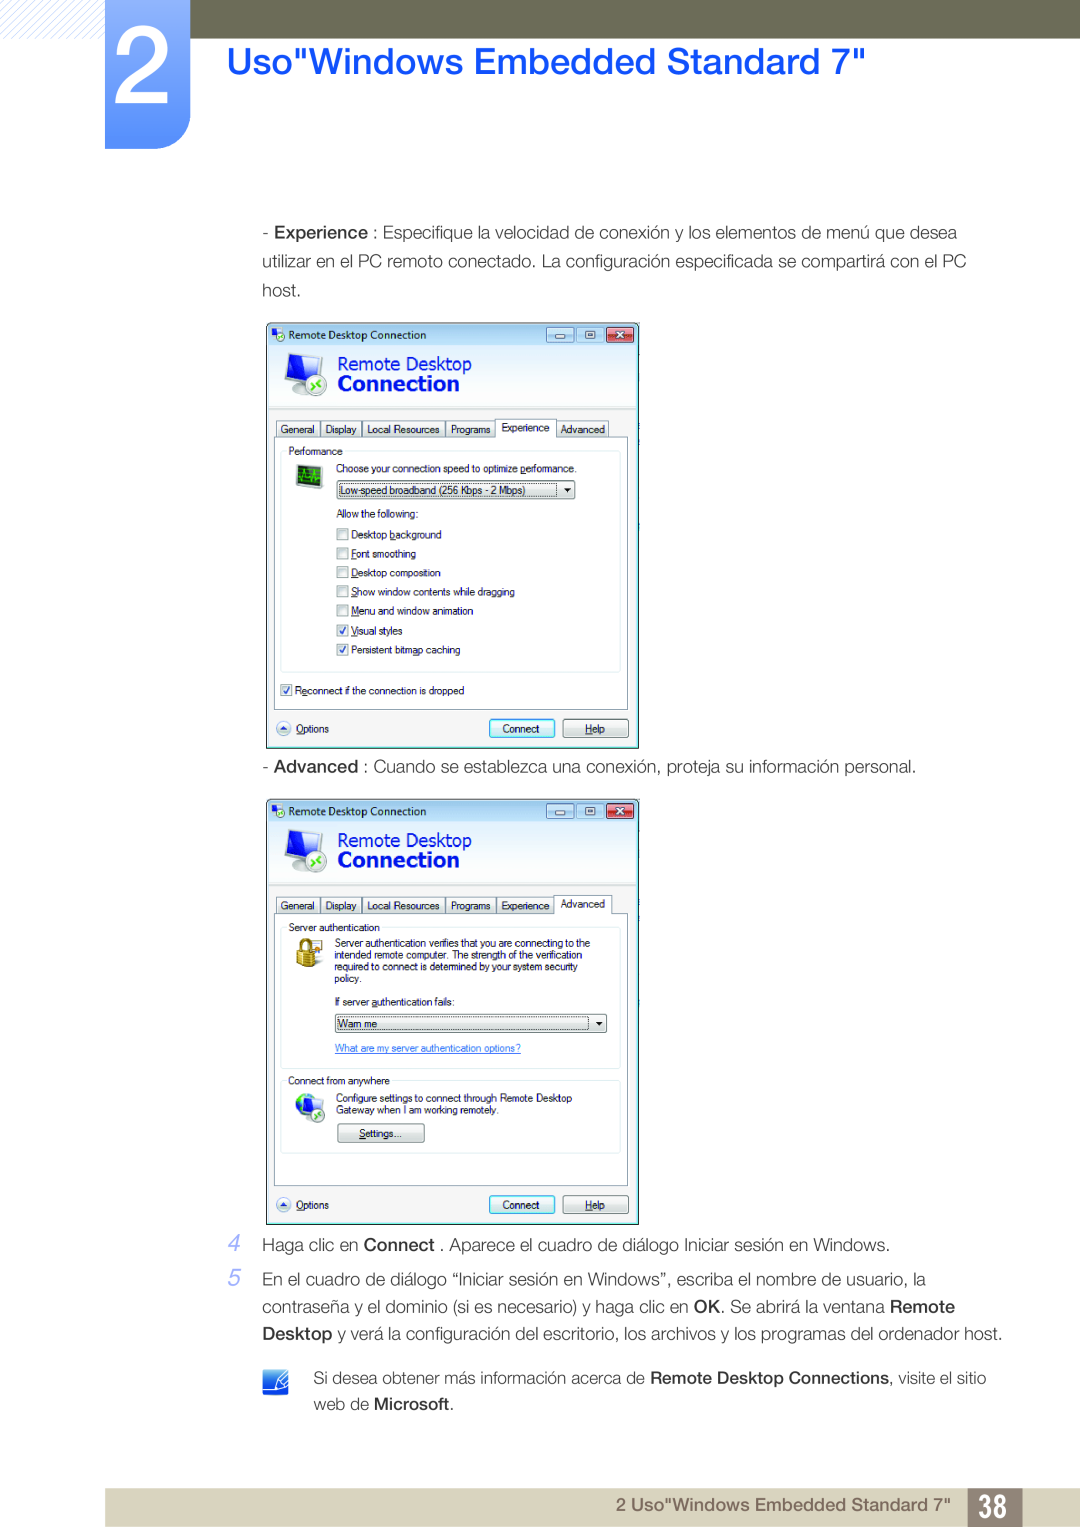 Samsung LF22TSWTBDN/EN, LF24TSWTBDN/EN, LF19TSWTBDN/EN manual web de Microsoft, UsoWindows Embedded Standard 7 